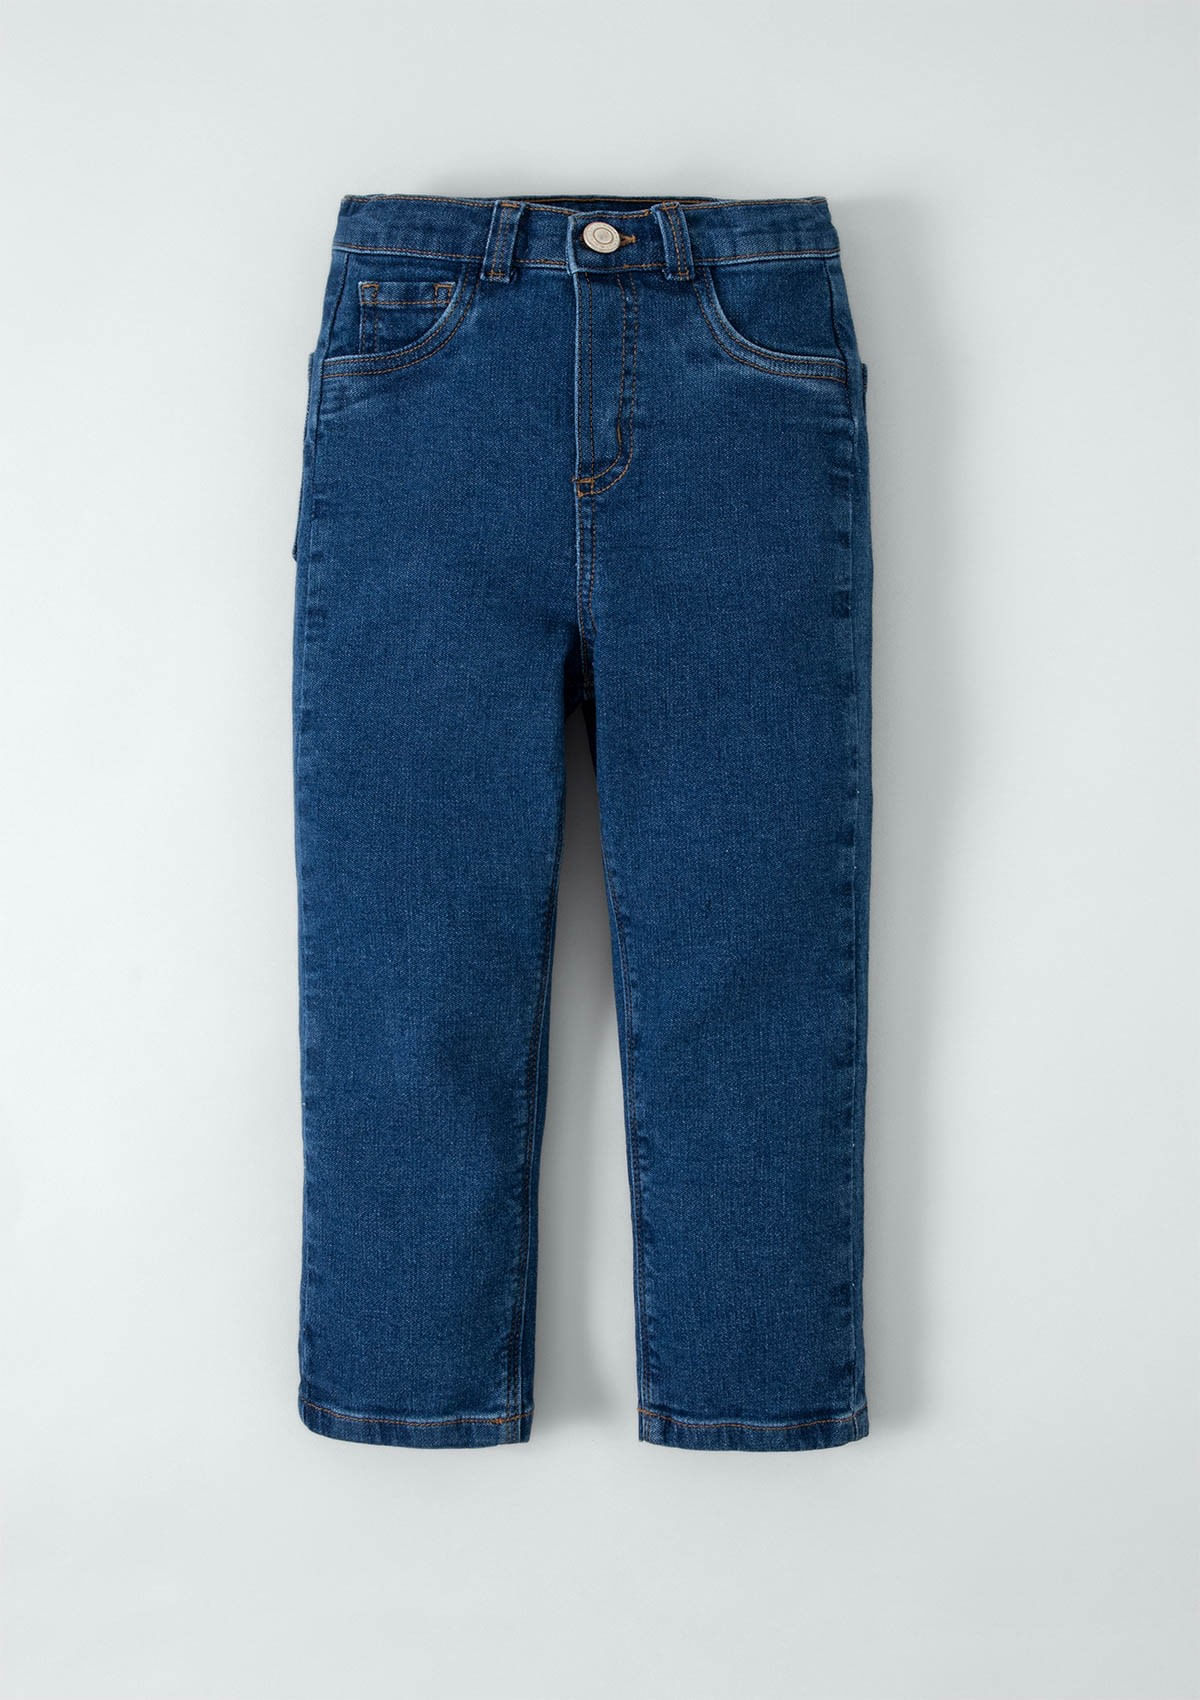 Calca Jeans Infantil Menina - Azul